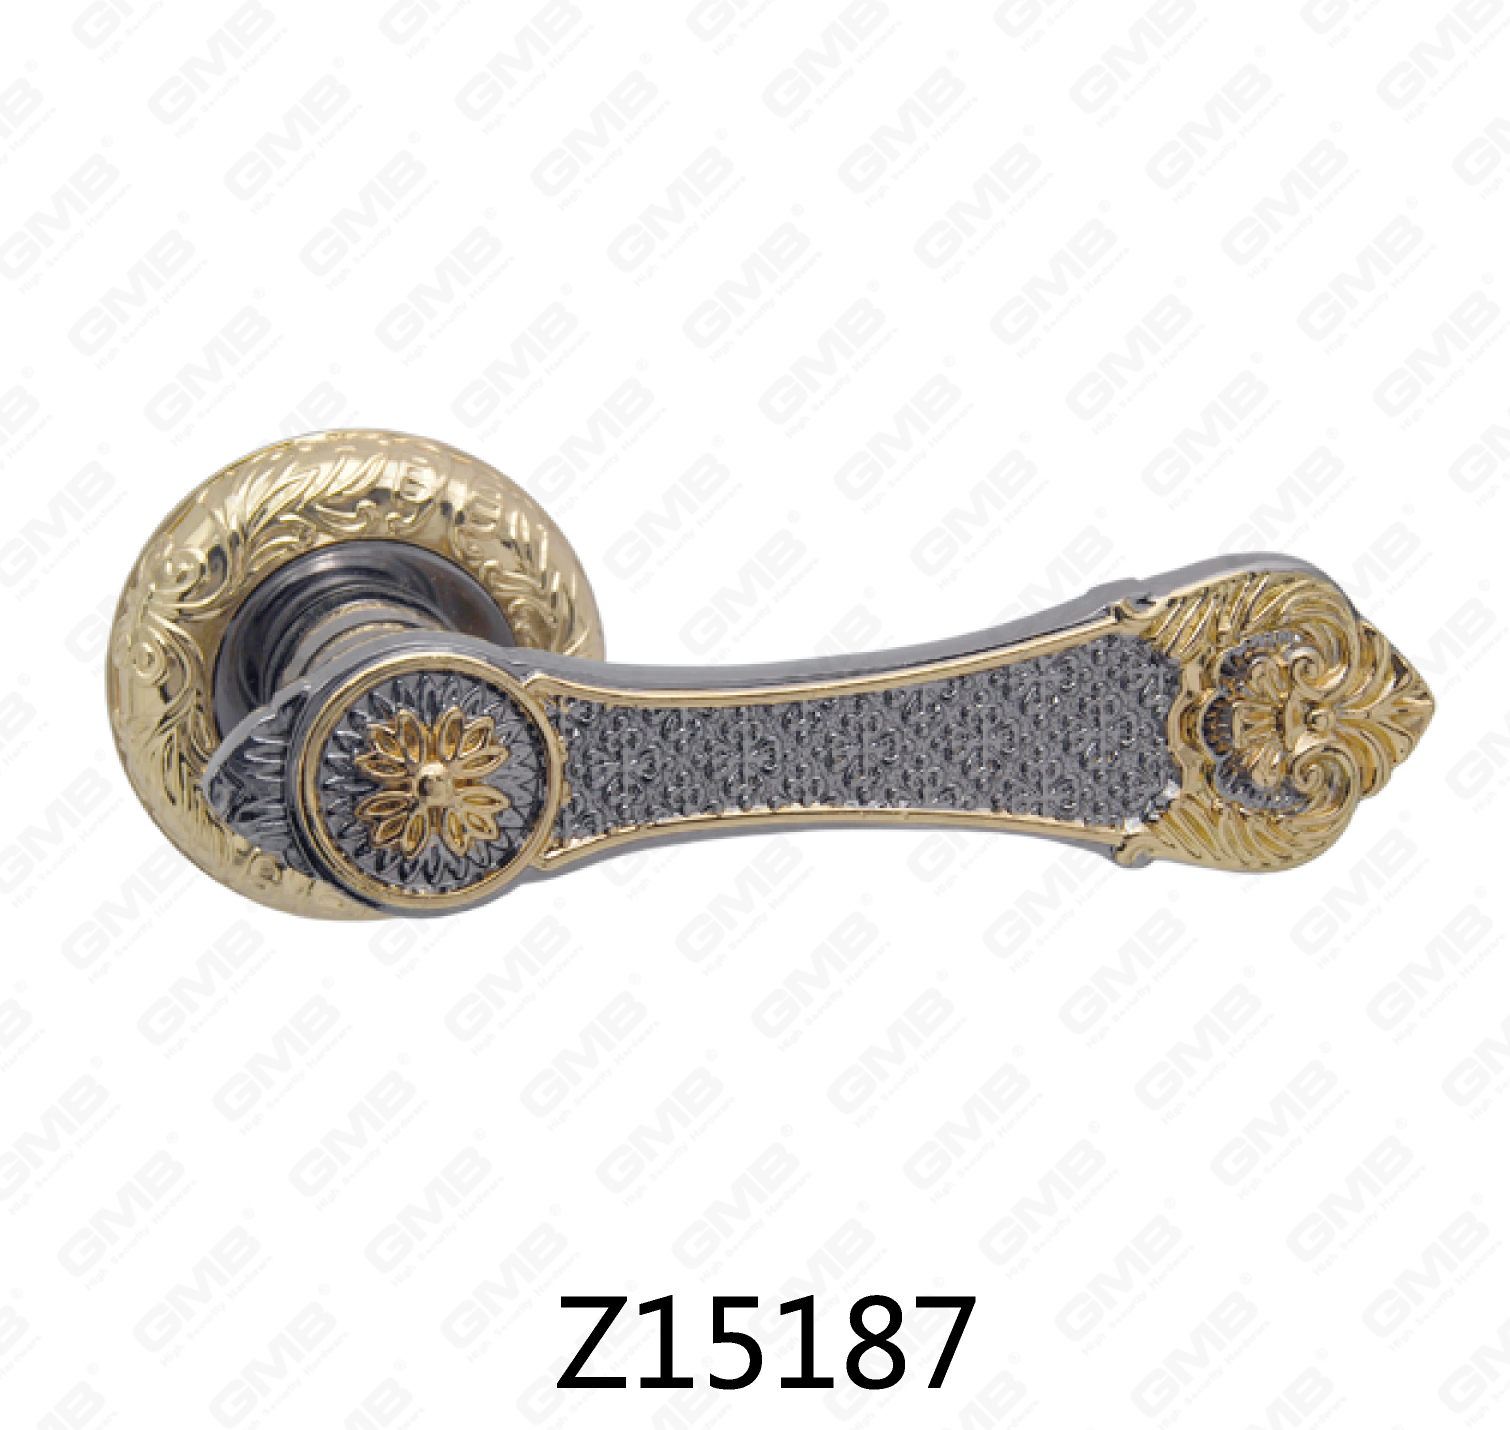 Manija de puerta de roseta de aluminio de aleación de zinc Zamak con roseta redonda (Z15187)